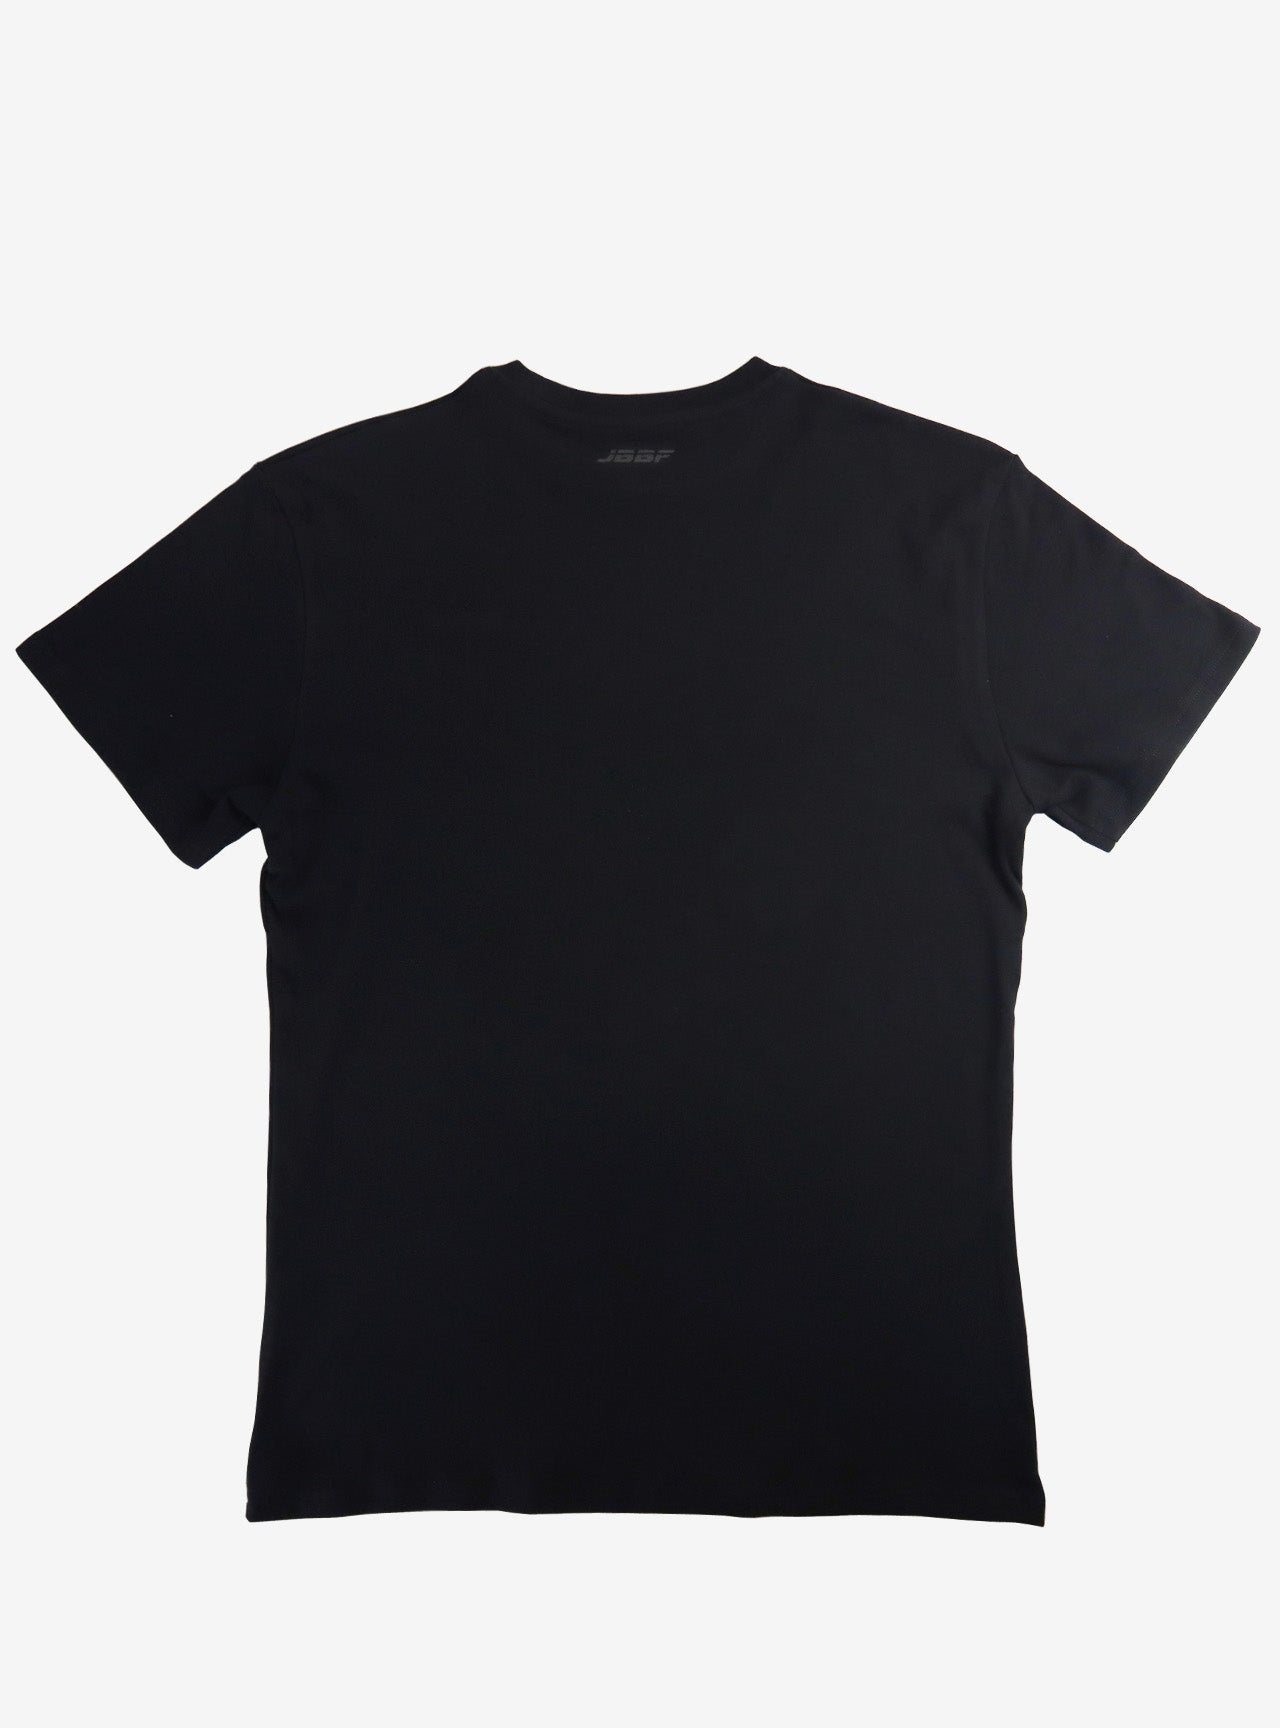 JBBF T-Shirt 黒ｘゴールド泊 ロゴ